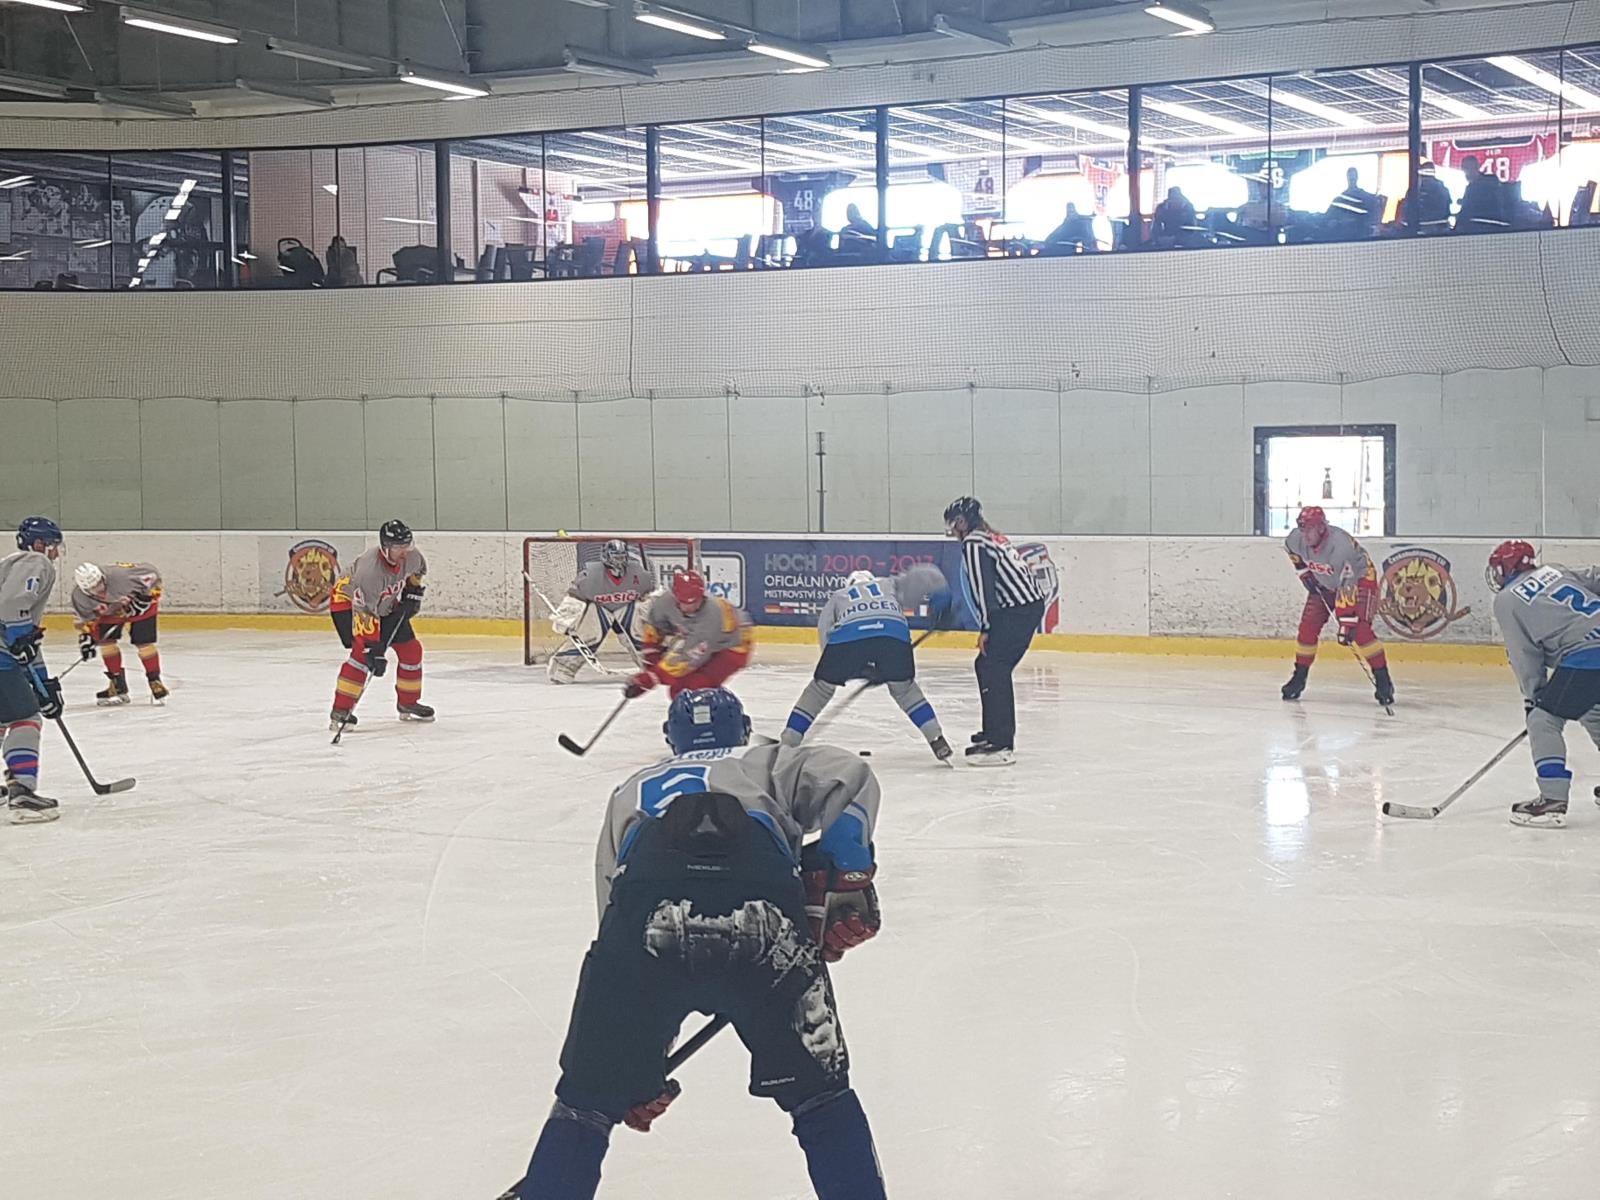 Hokejový turnaj IZS, České Budějovice - 17. 4. 2019 (7).jpg